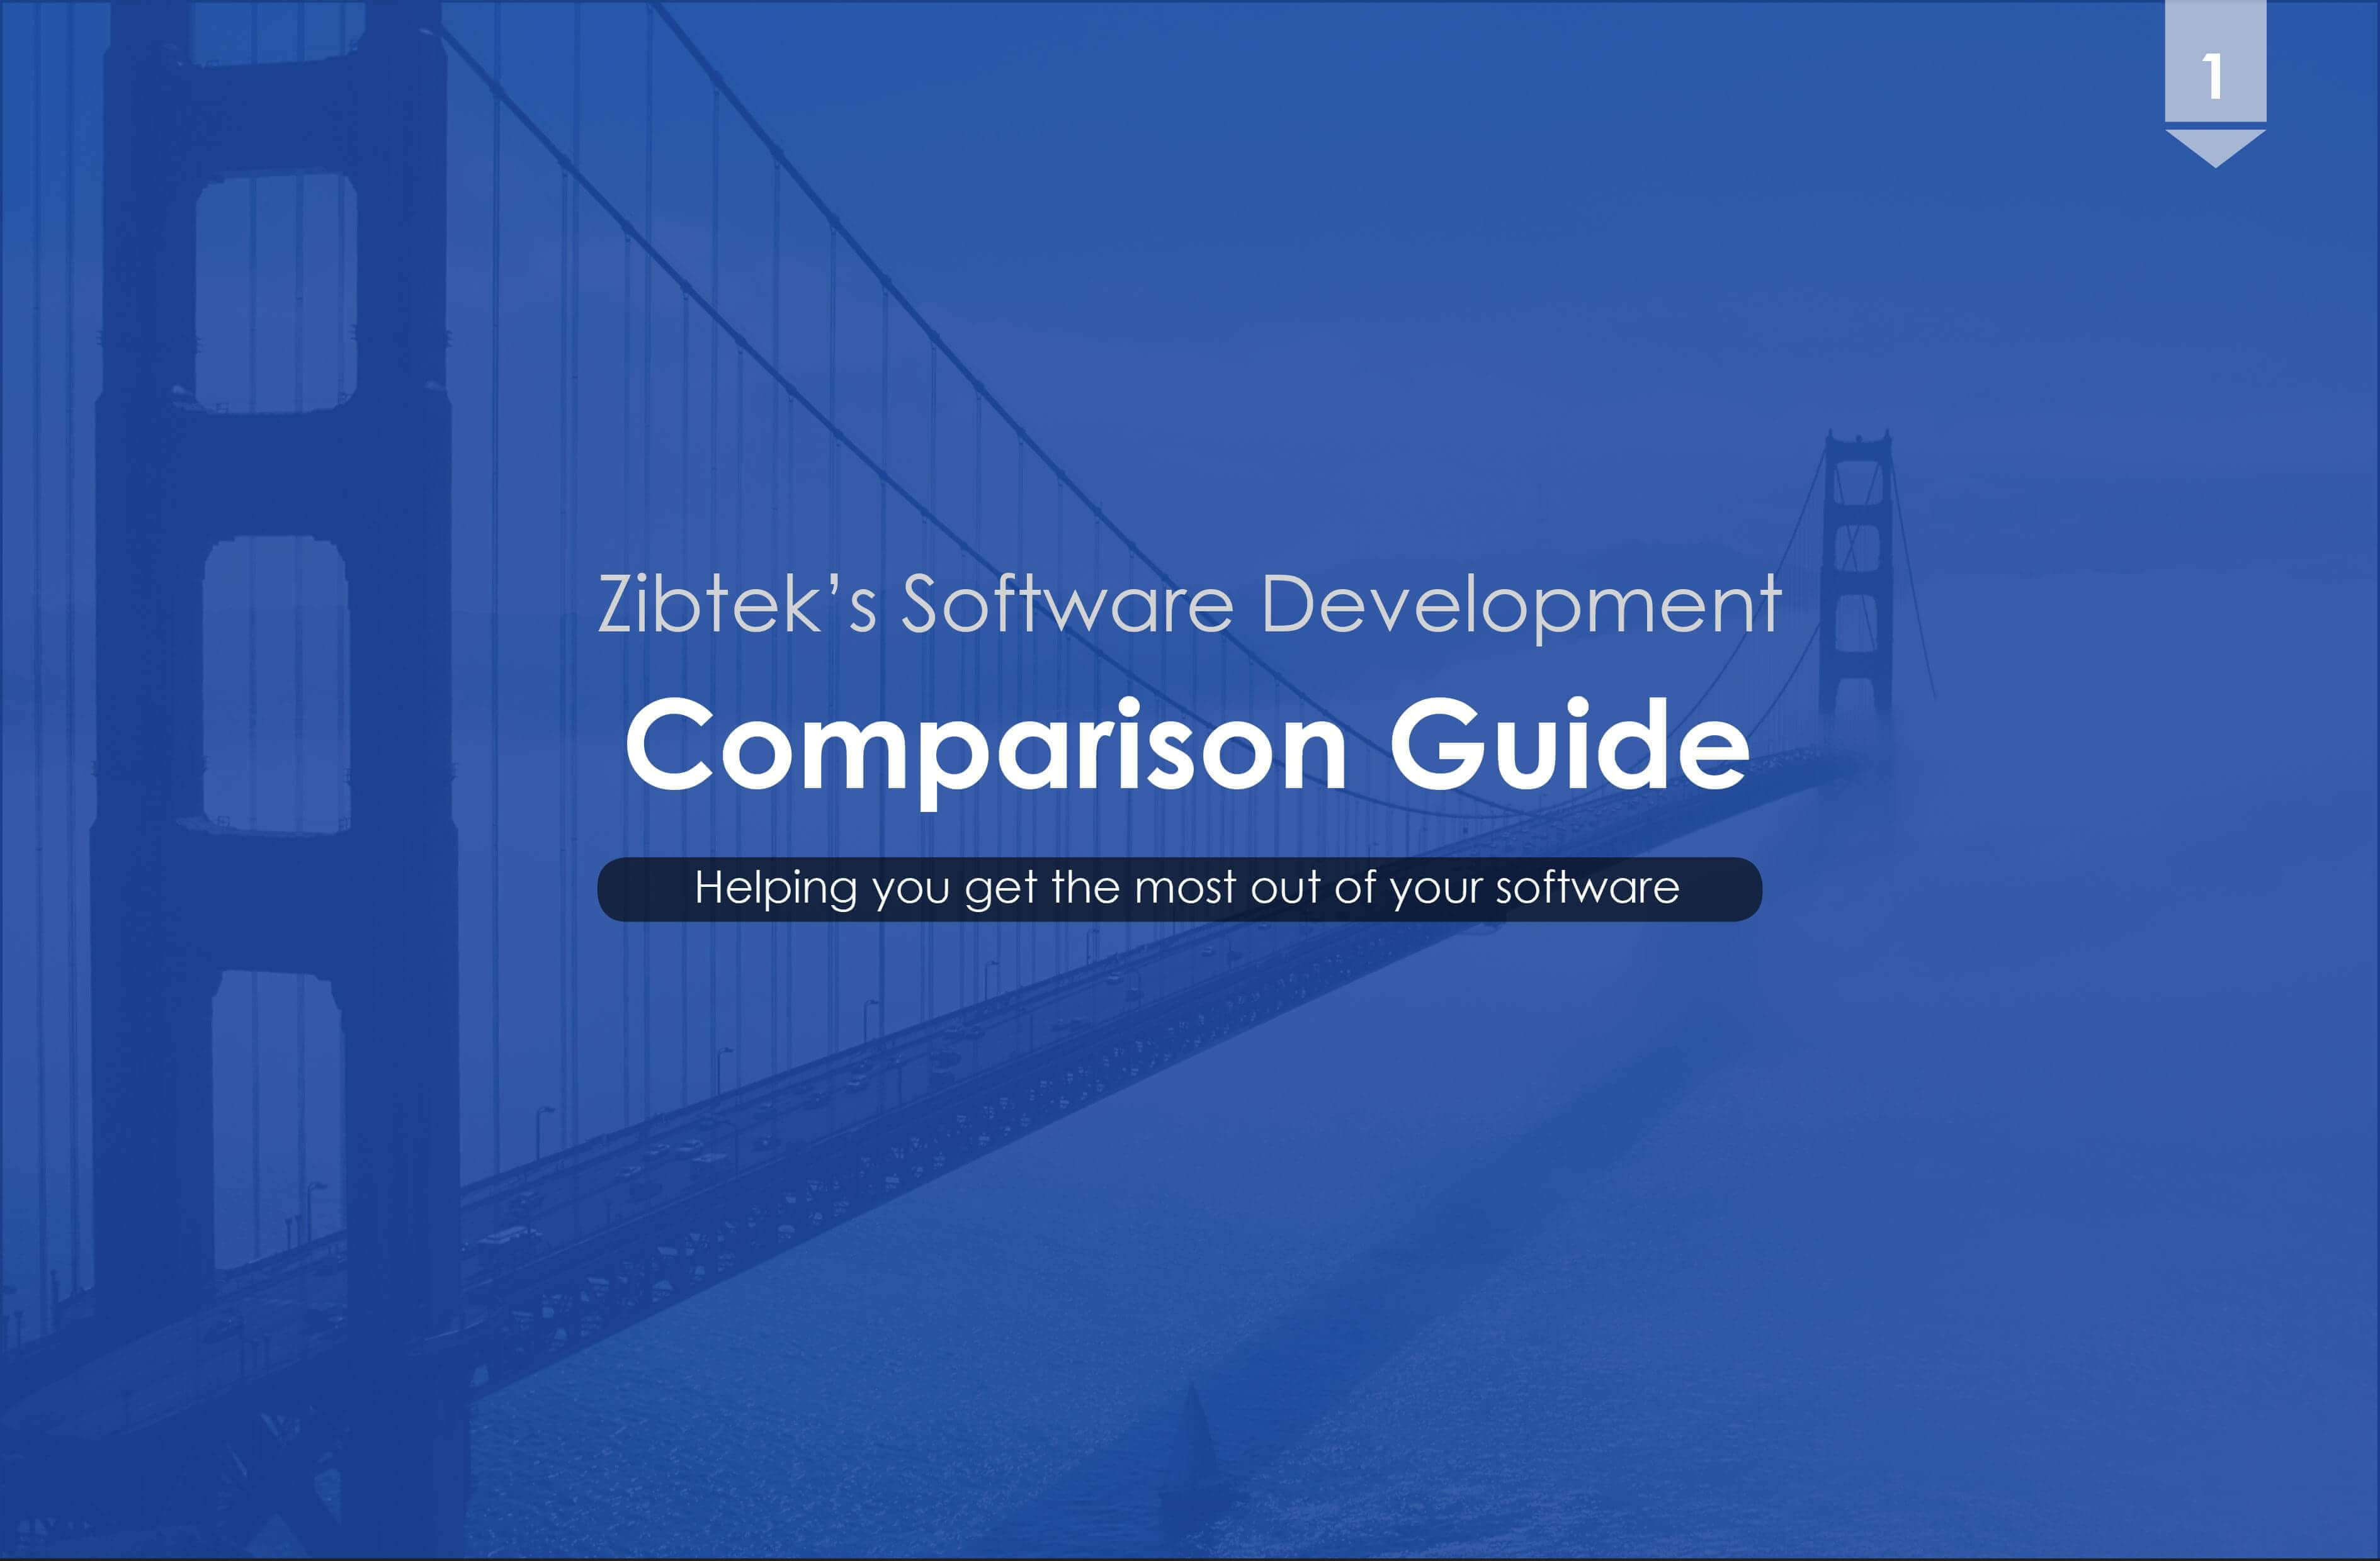 Zibtek’s Software Development Comparison Guide